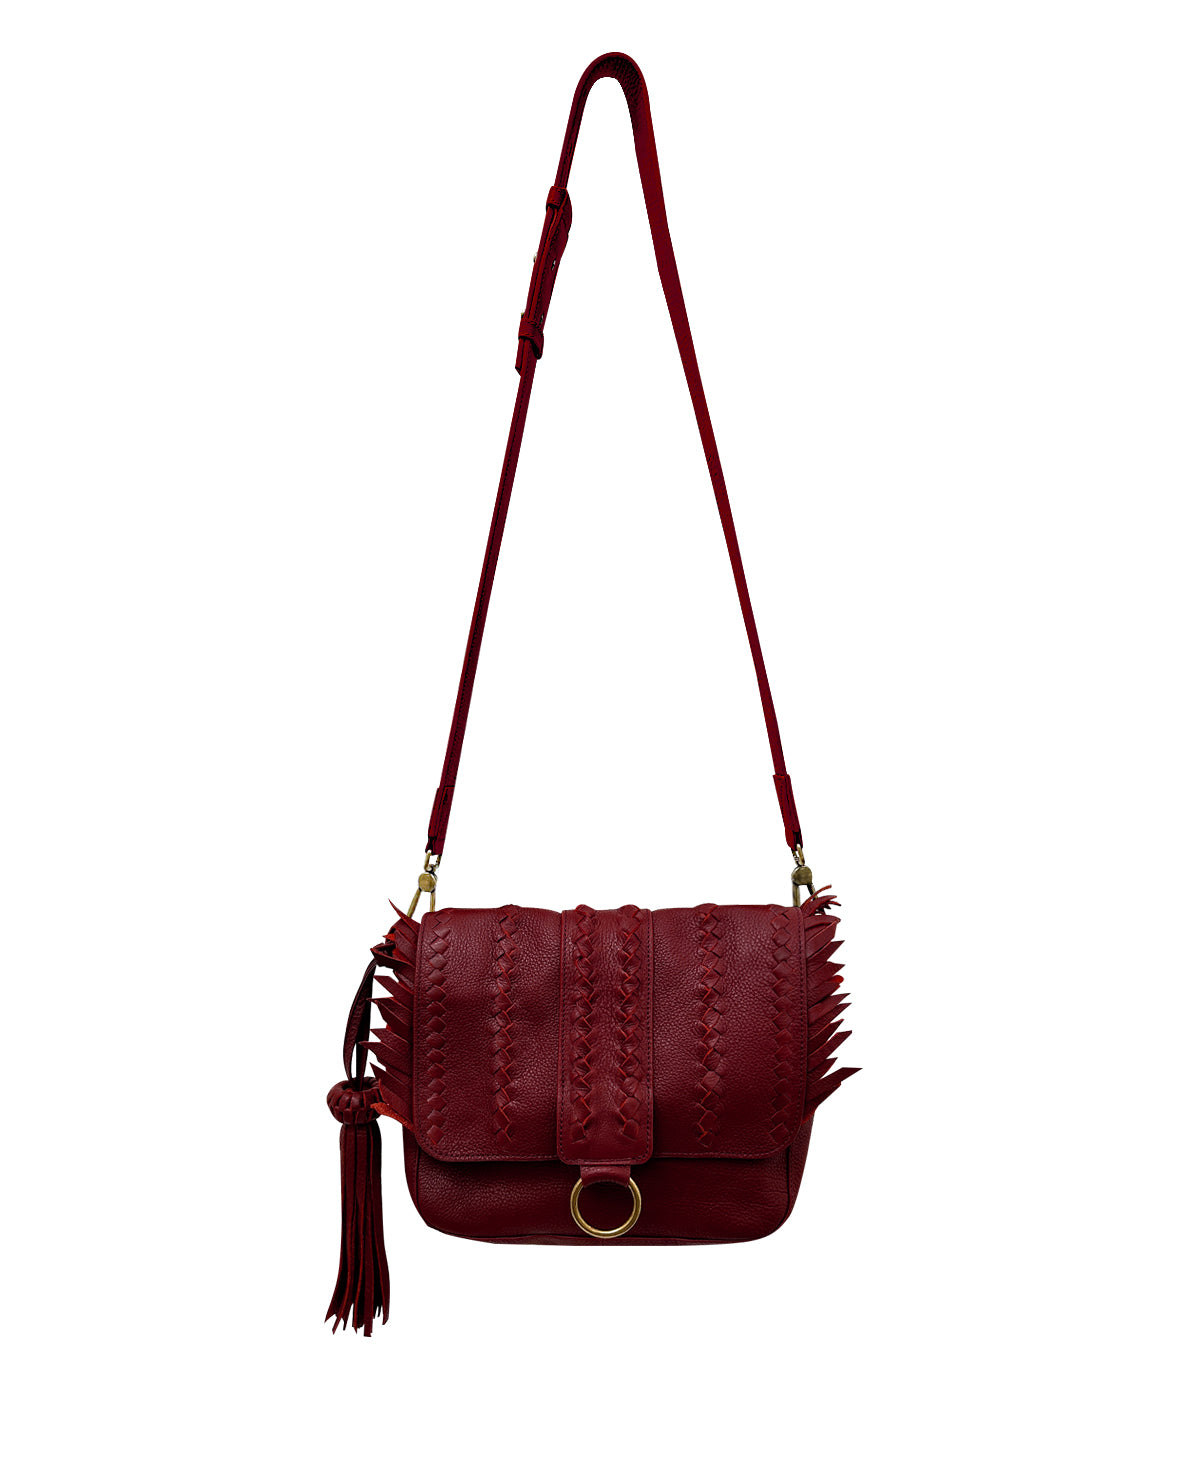 Reddish/Cognac SENECA Leather Bag with Braids & Frings Details